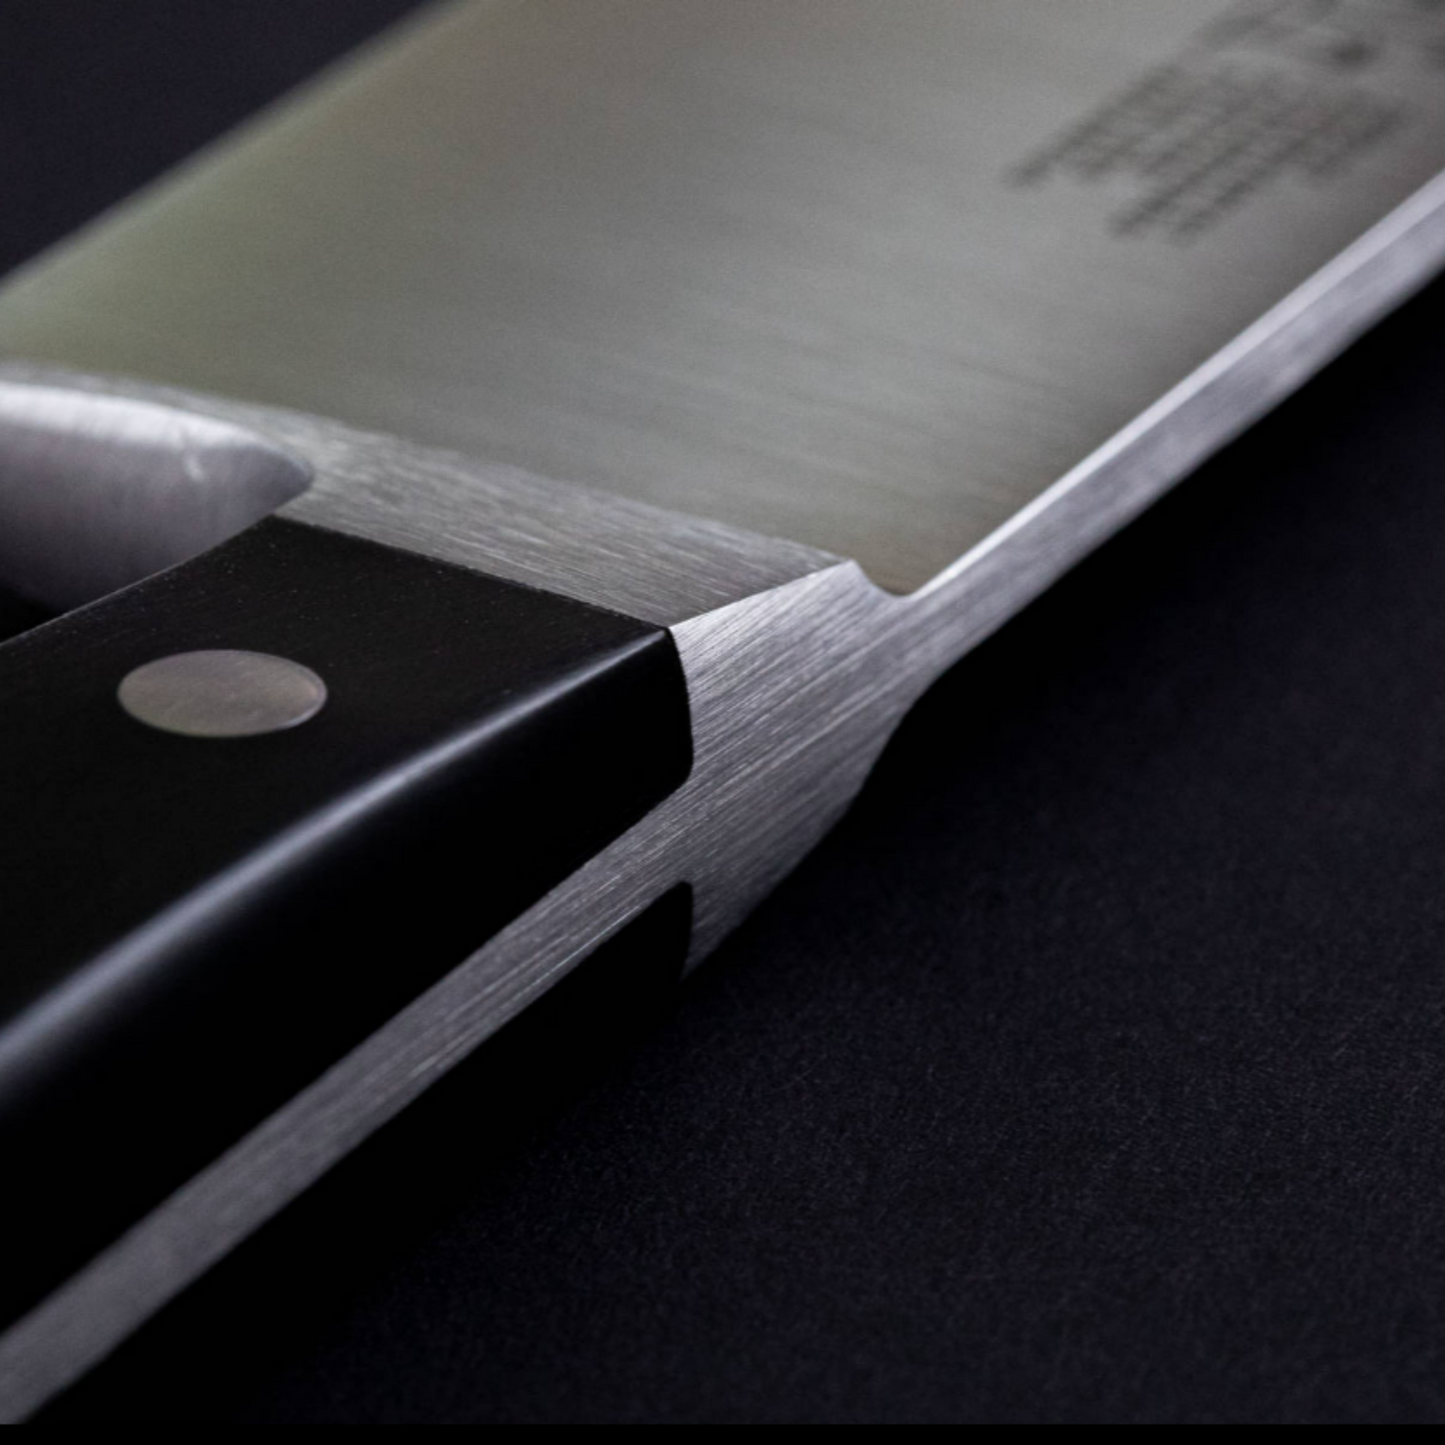 Gude Alpha Series Forged Double Bolster Carving Knife 8", Black Hostaform Handle - GuedeUSA